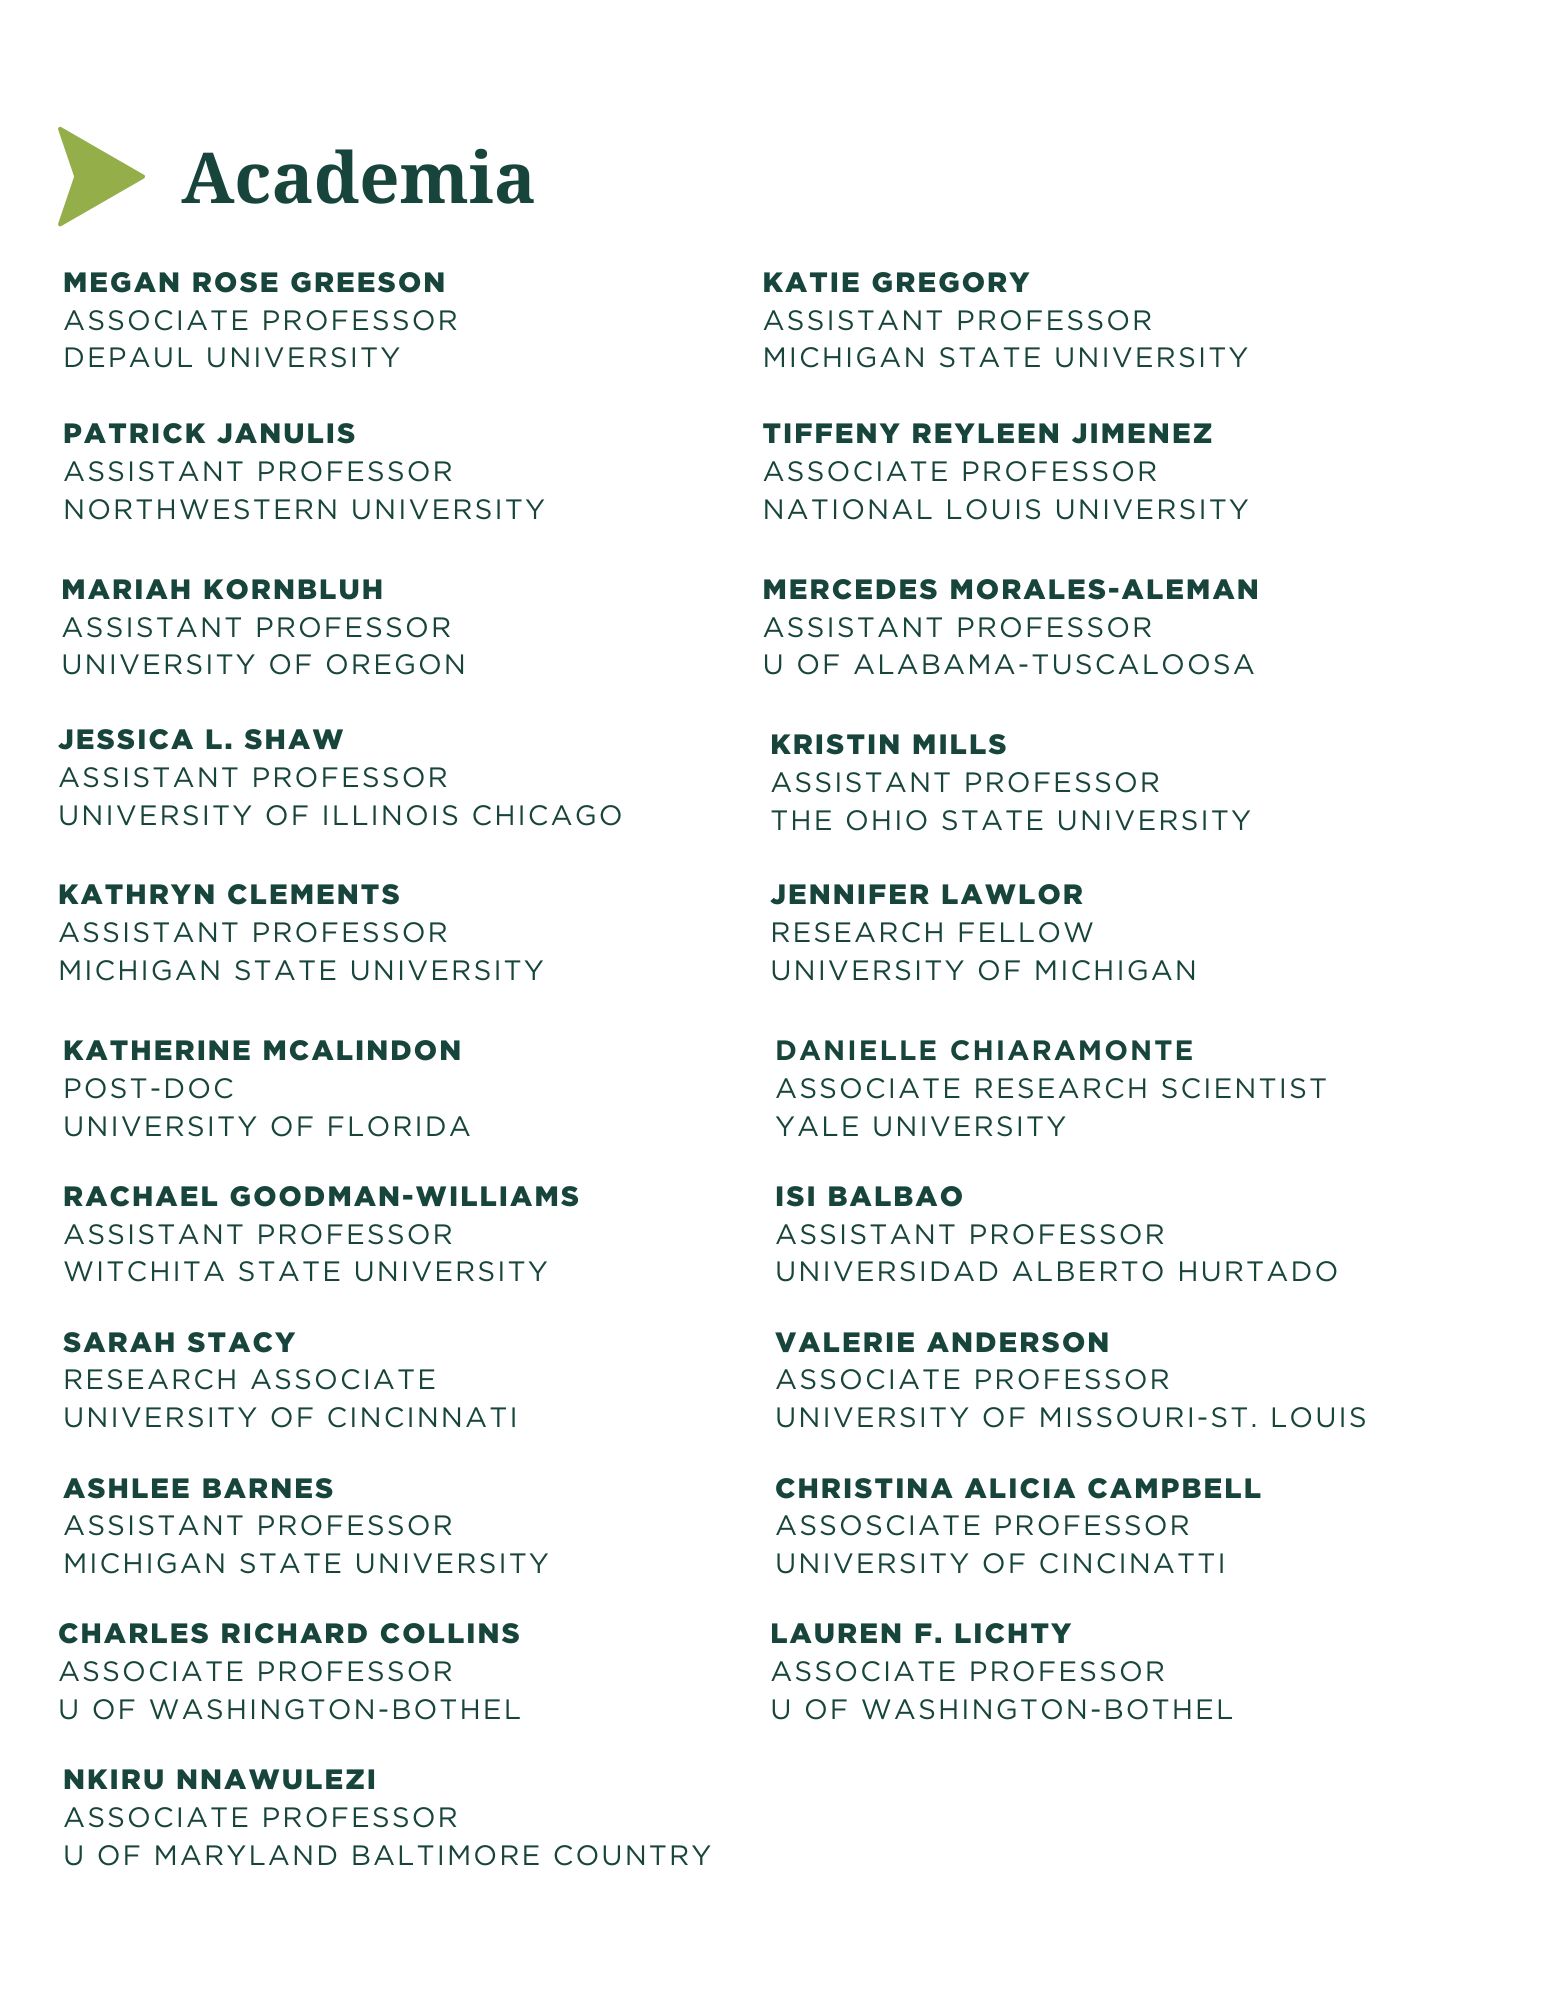 list of alumni working in academia